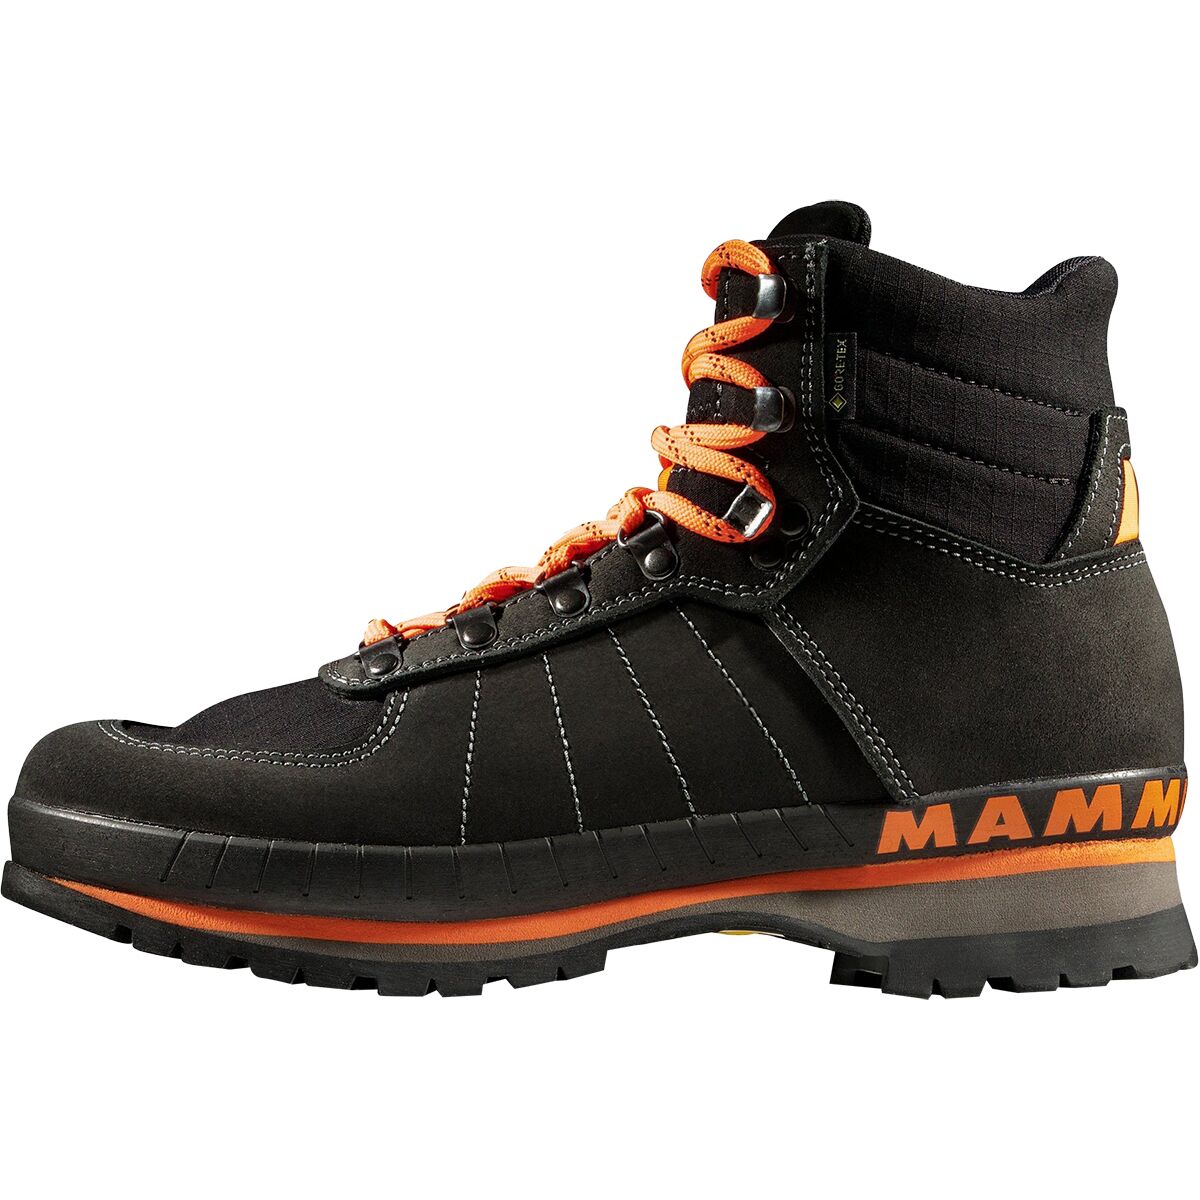 Mammut Yatna II High GTX Hiking Boot - Men's